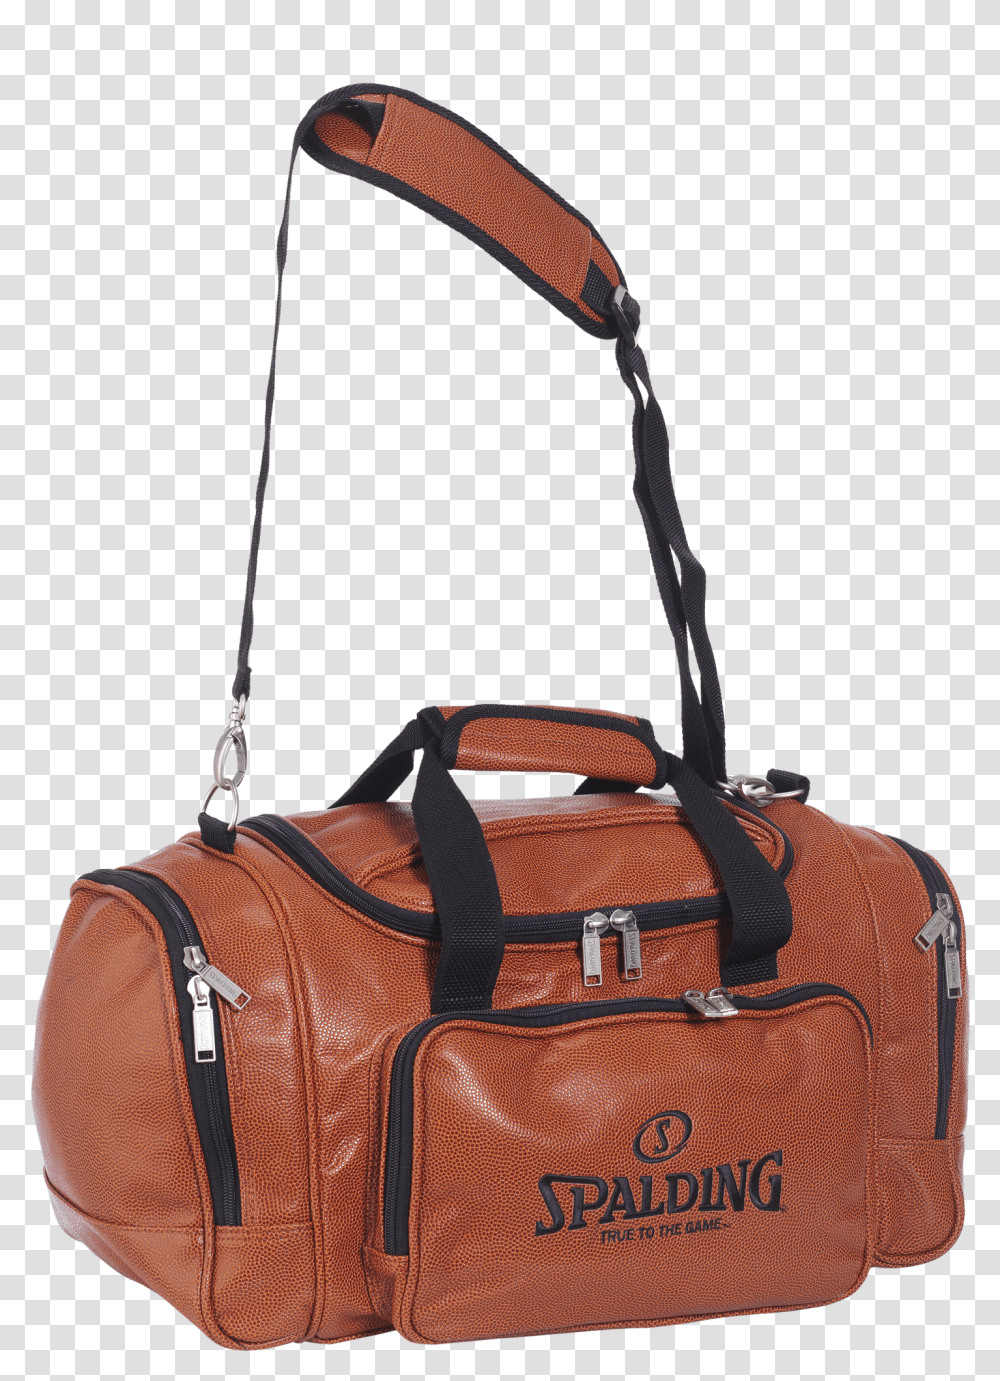 Spalding Basketball Duffle Bag Satchel, Accessories, Accessory, Handbag, Purse Transparent Png